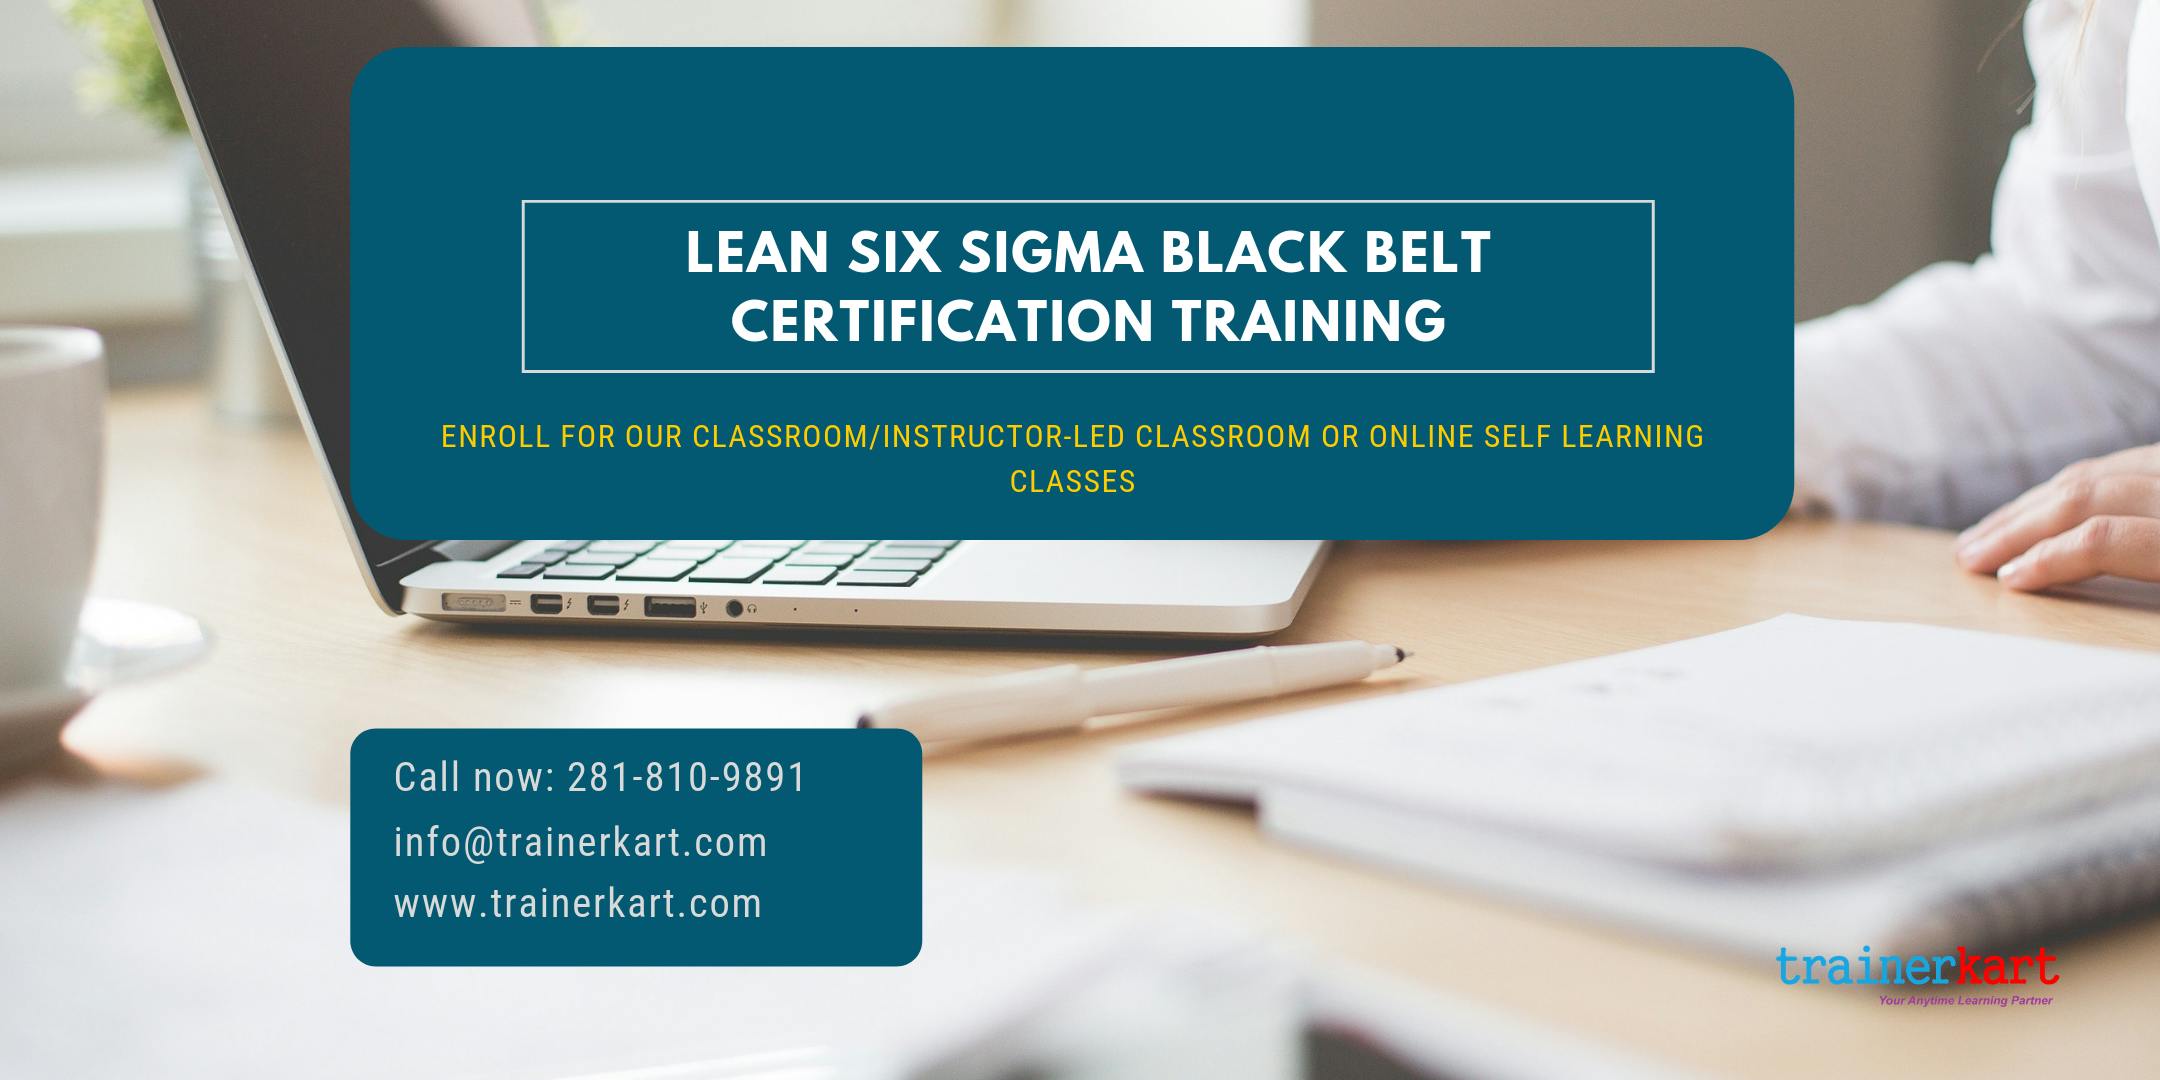  Lean Six Sigma Black Belt (LSSBB) Certification Training in Corvallis, OR